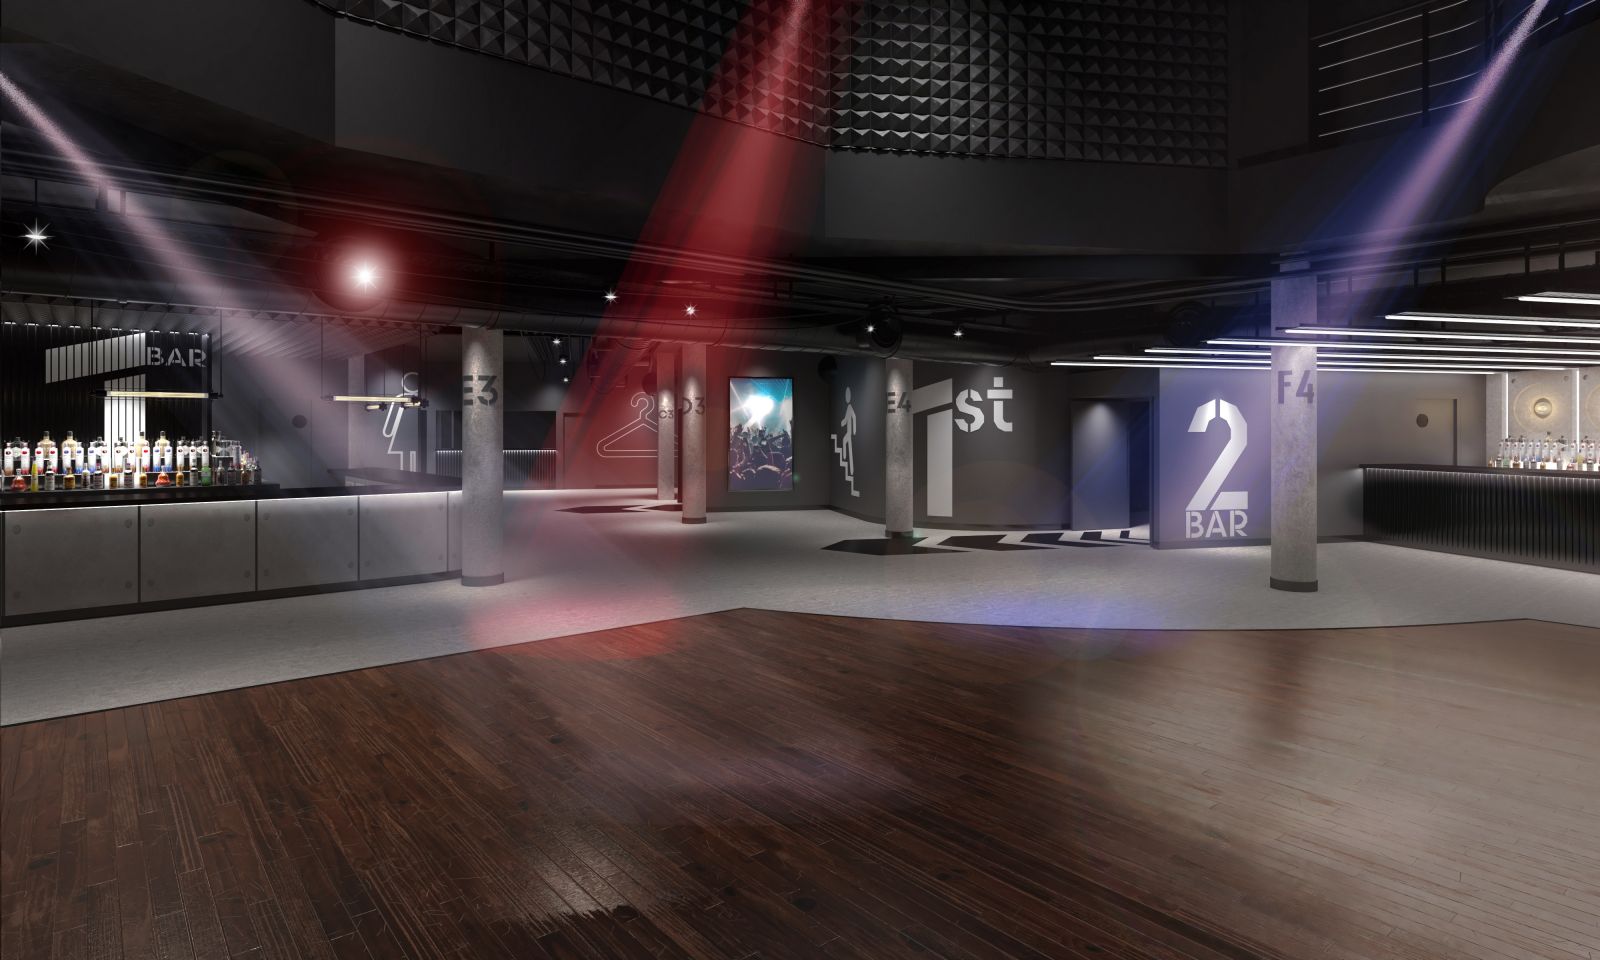 An artist render of SWX's refurbished dancefloor space. Credit: Design at Source